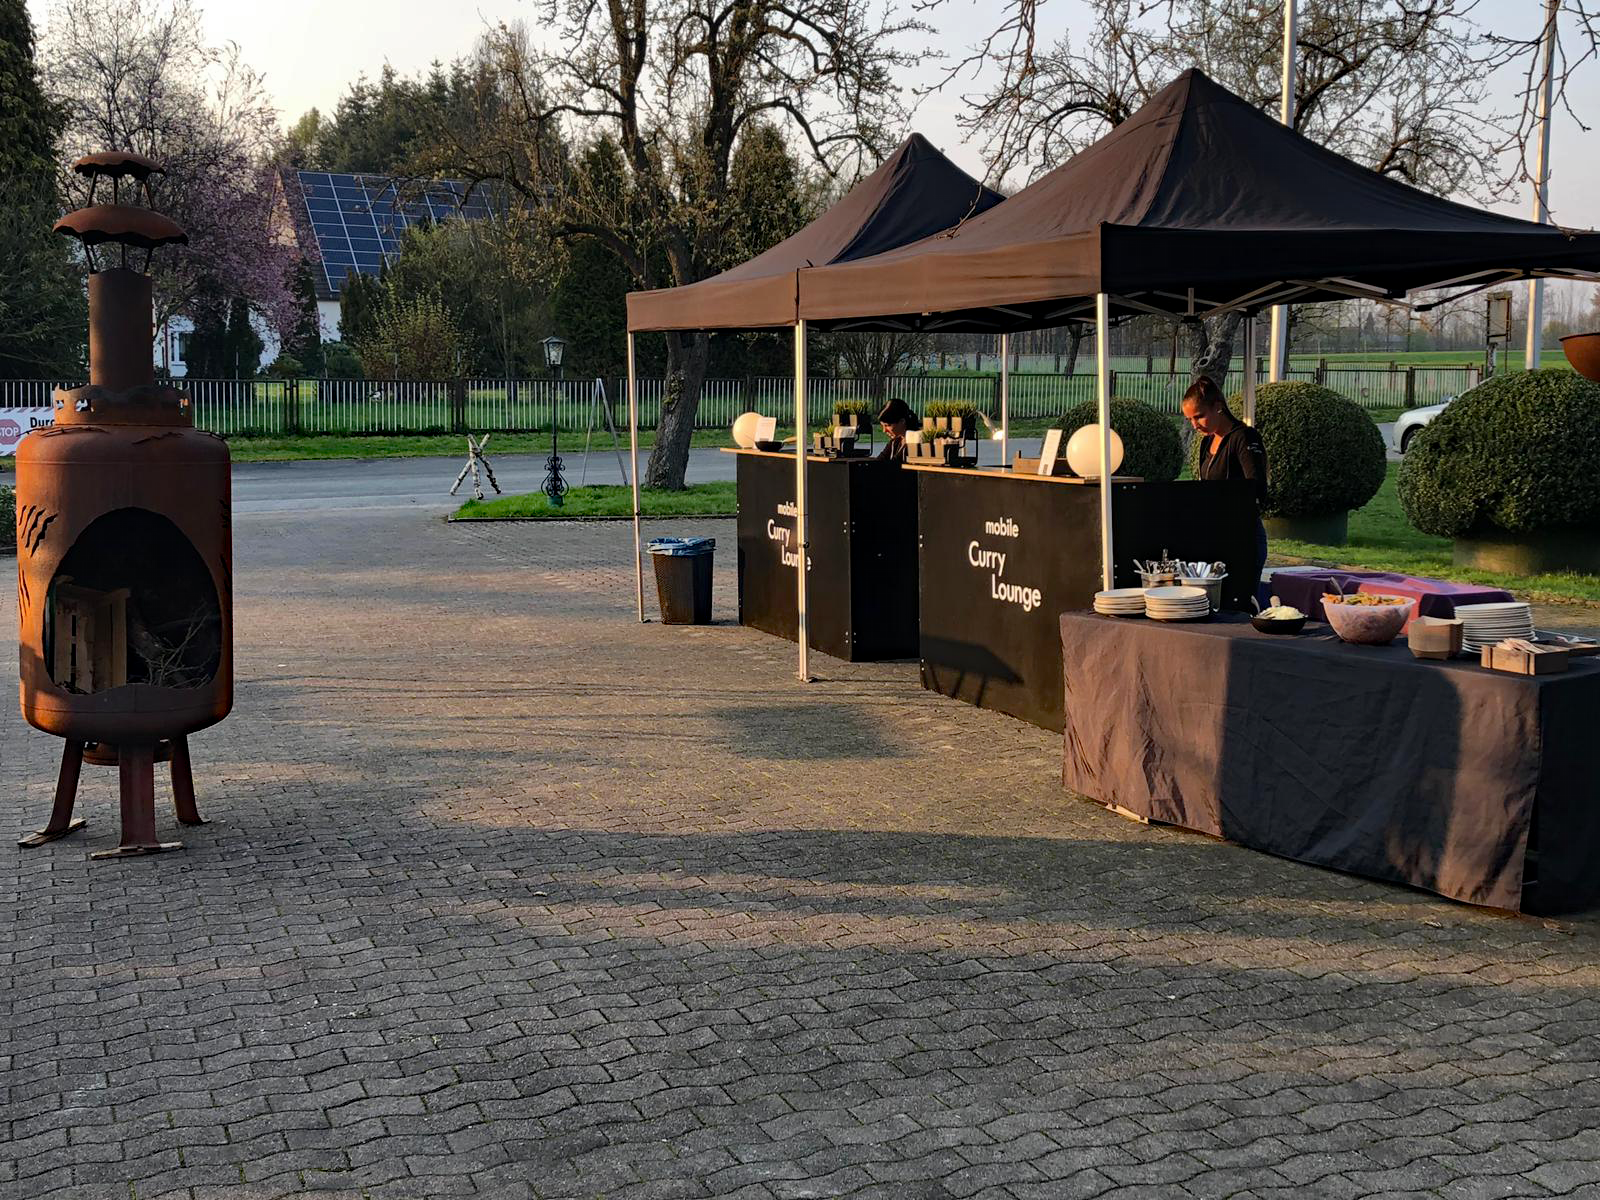 Imbisswagen mieten in Bielefeld | mobile Curry Lounge